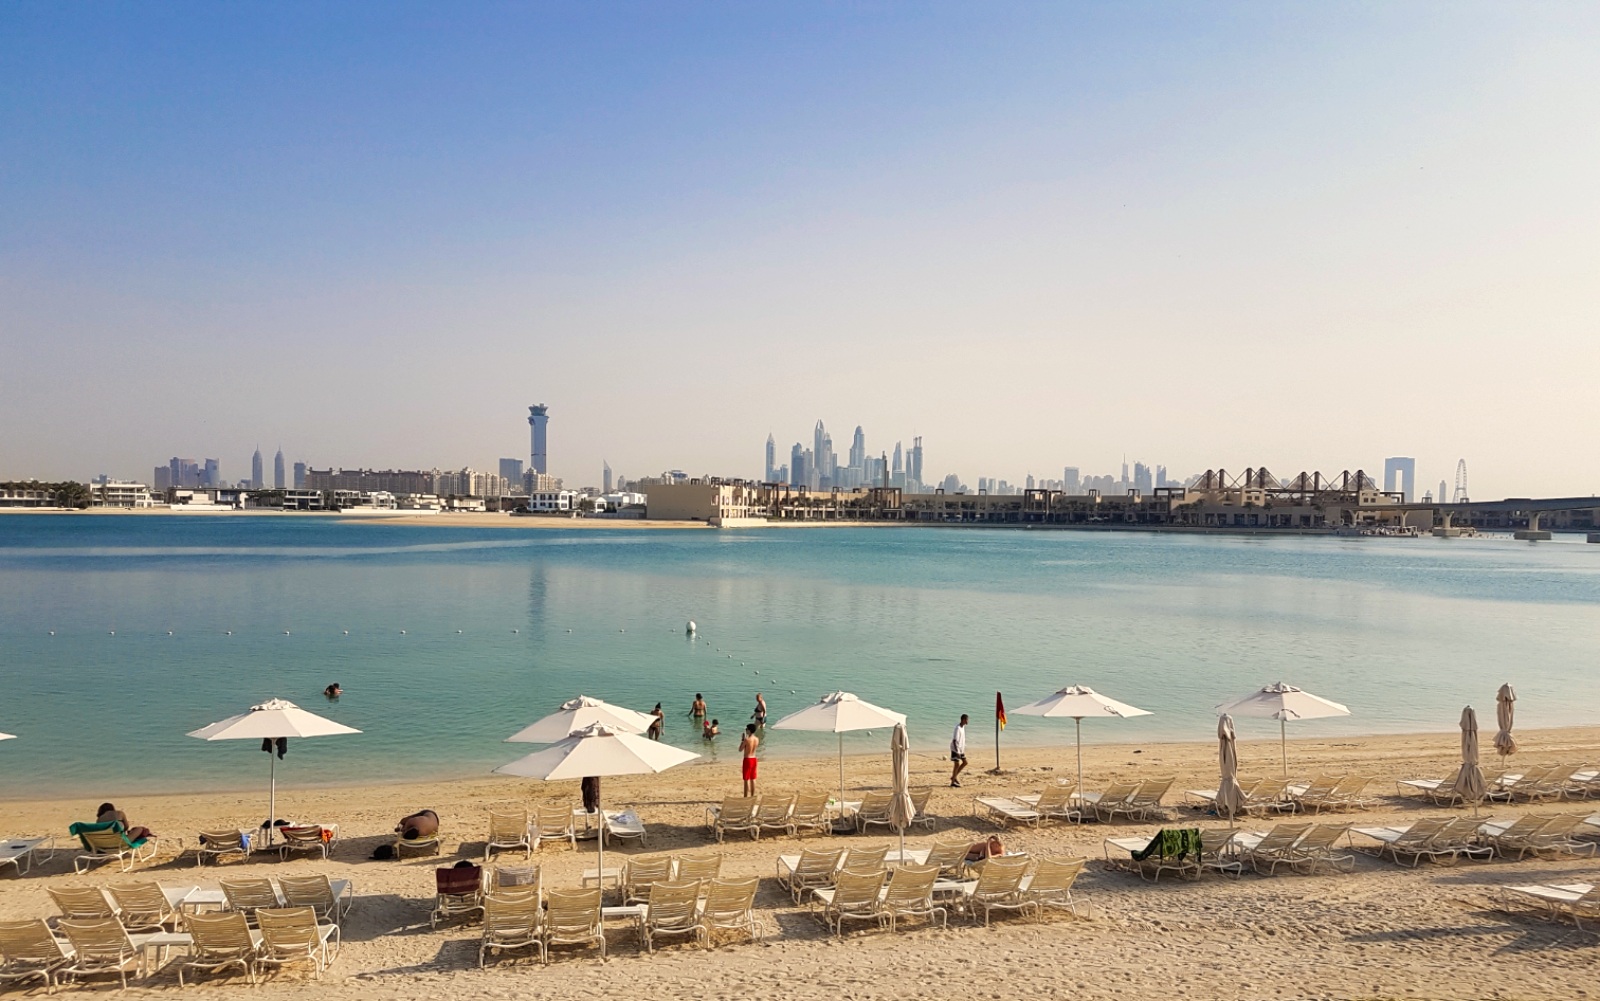 Aquaventure Waterpark Dubai - Beach loungers